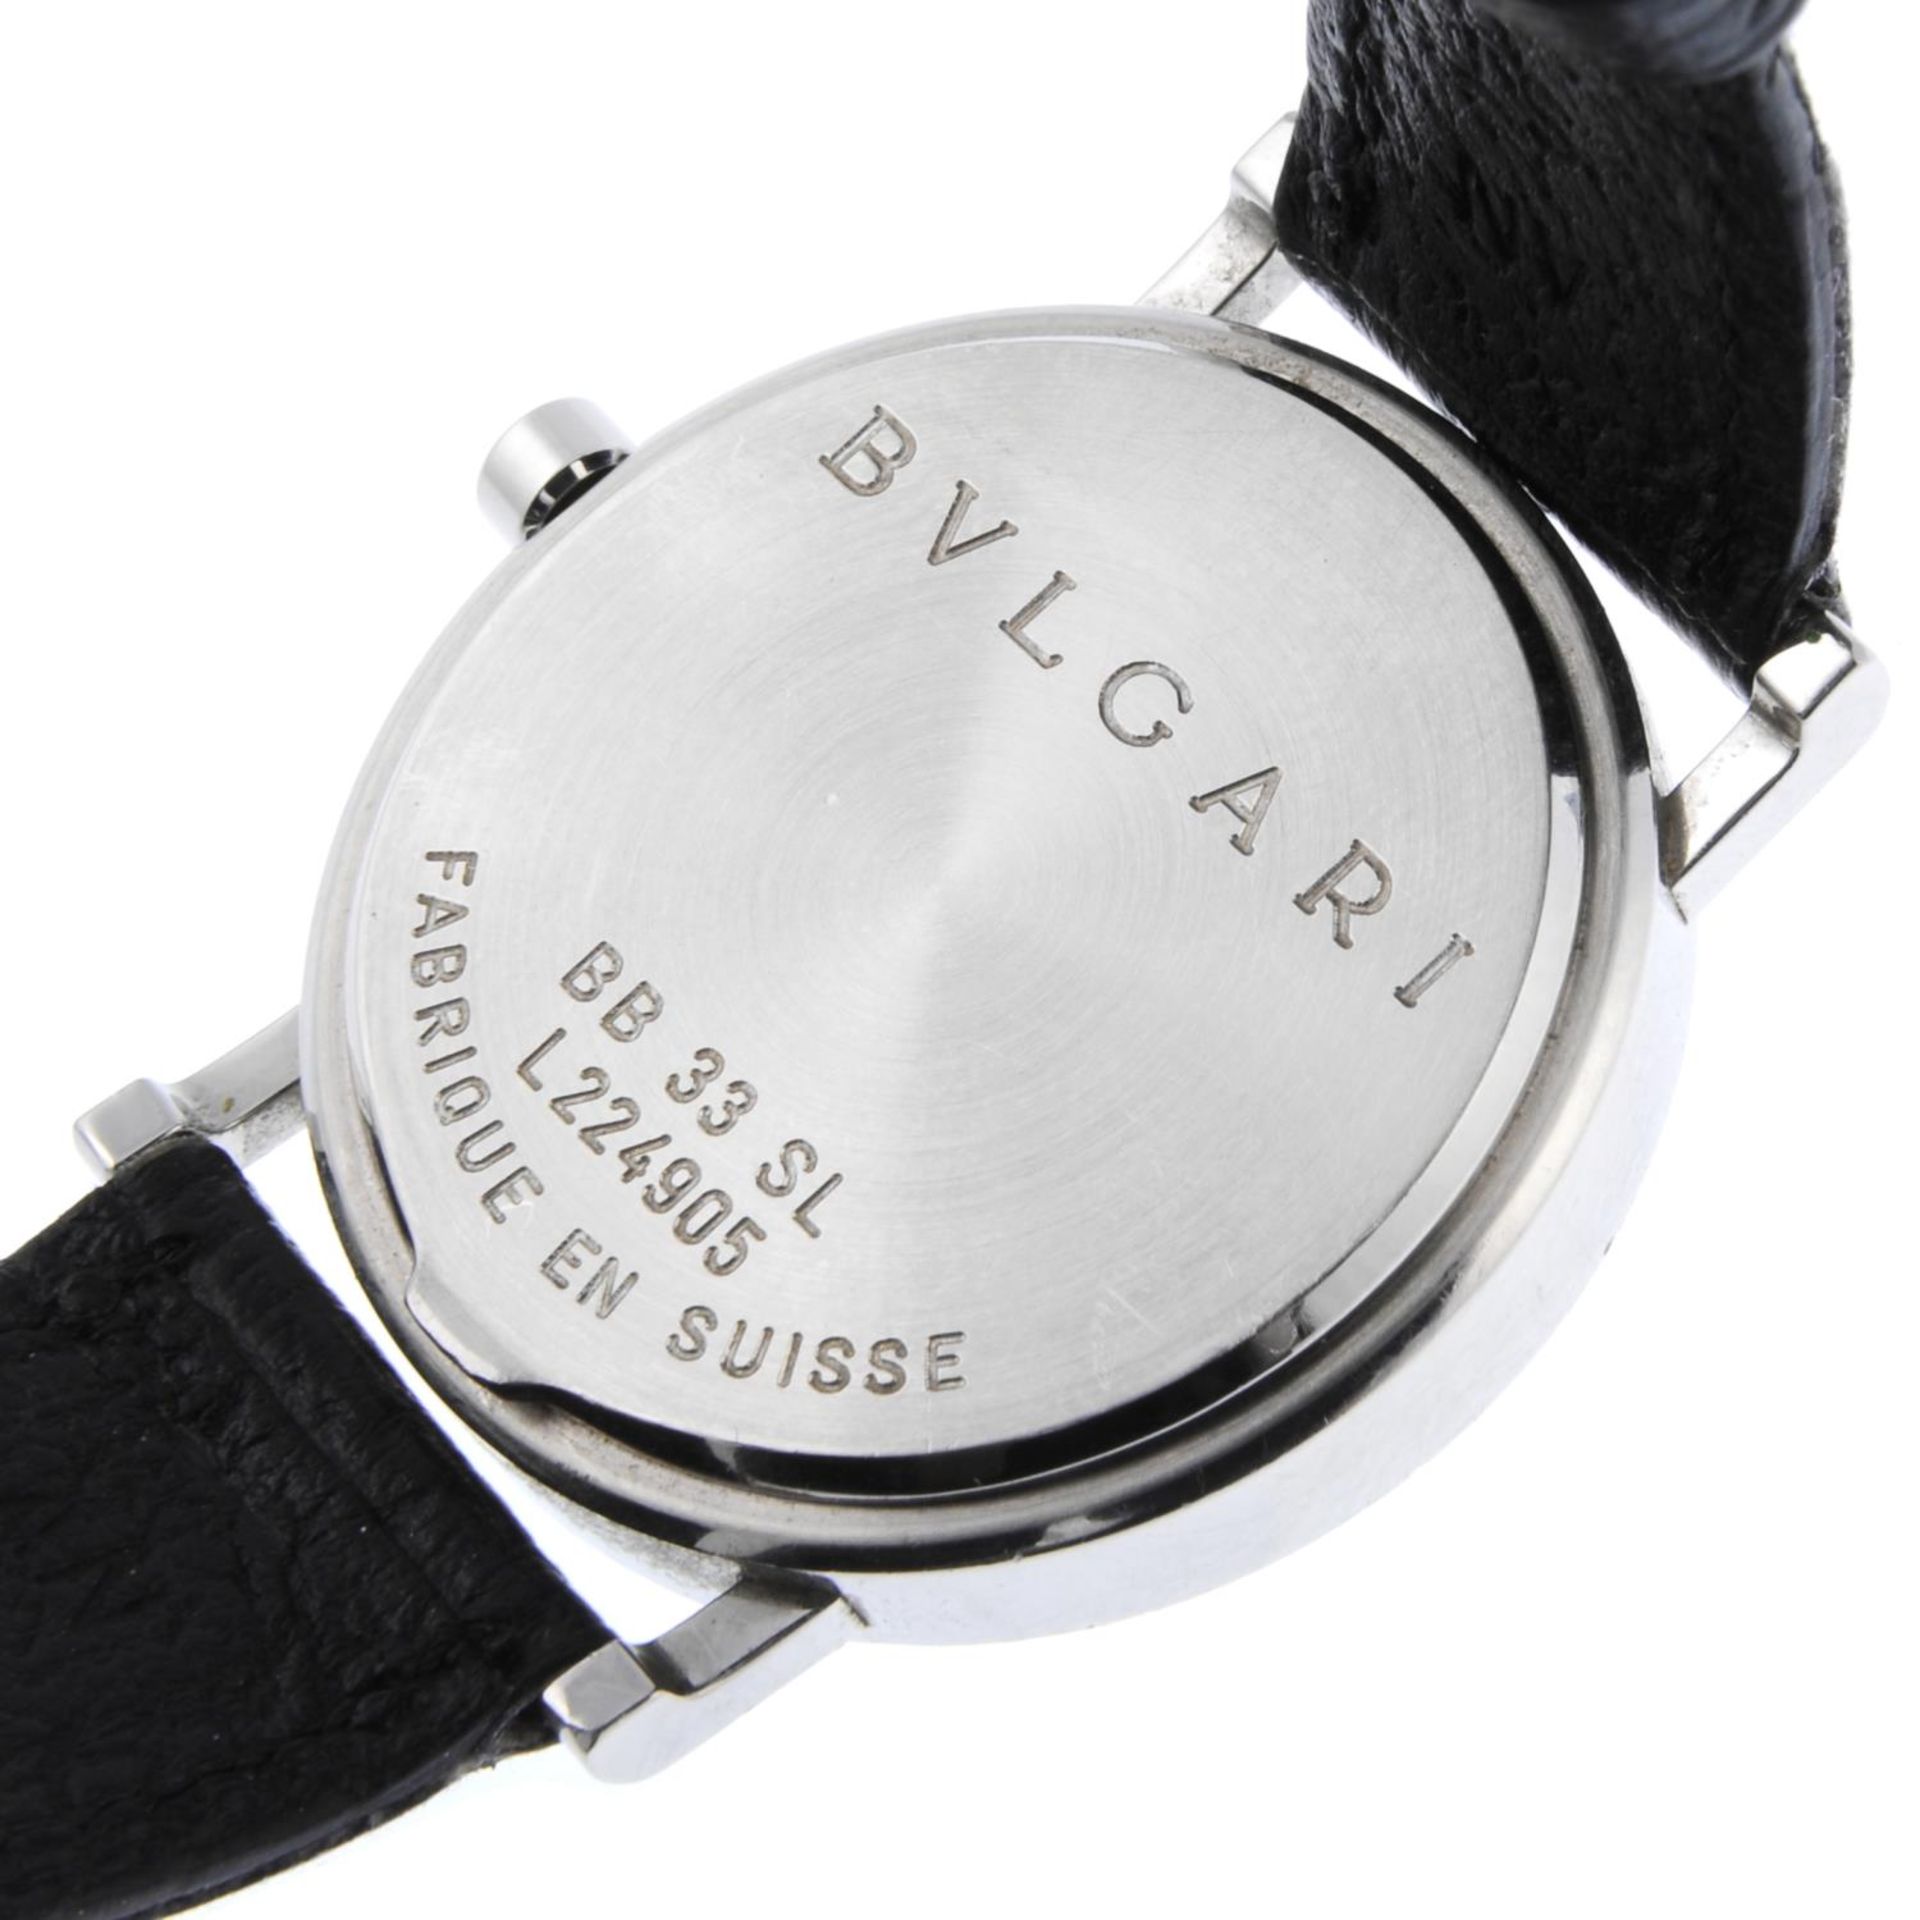 BULGARI - a mid-size Bulgari wrist watch. - Bild 4 aus 5